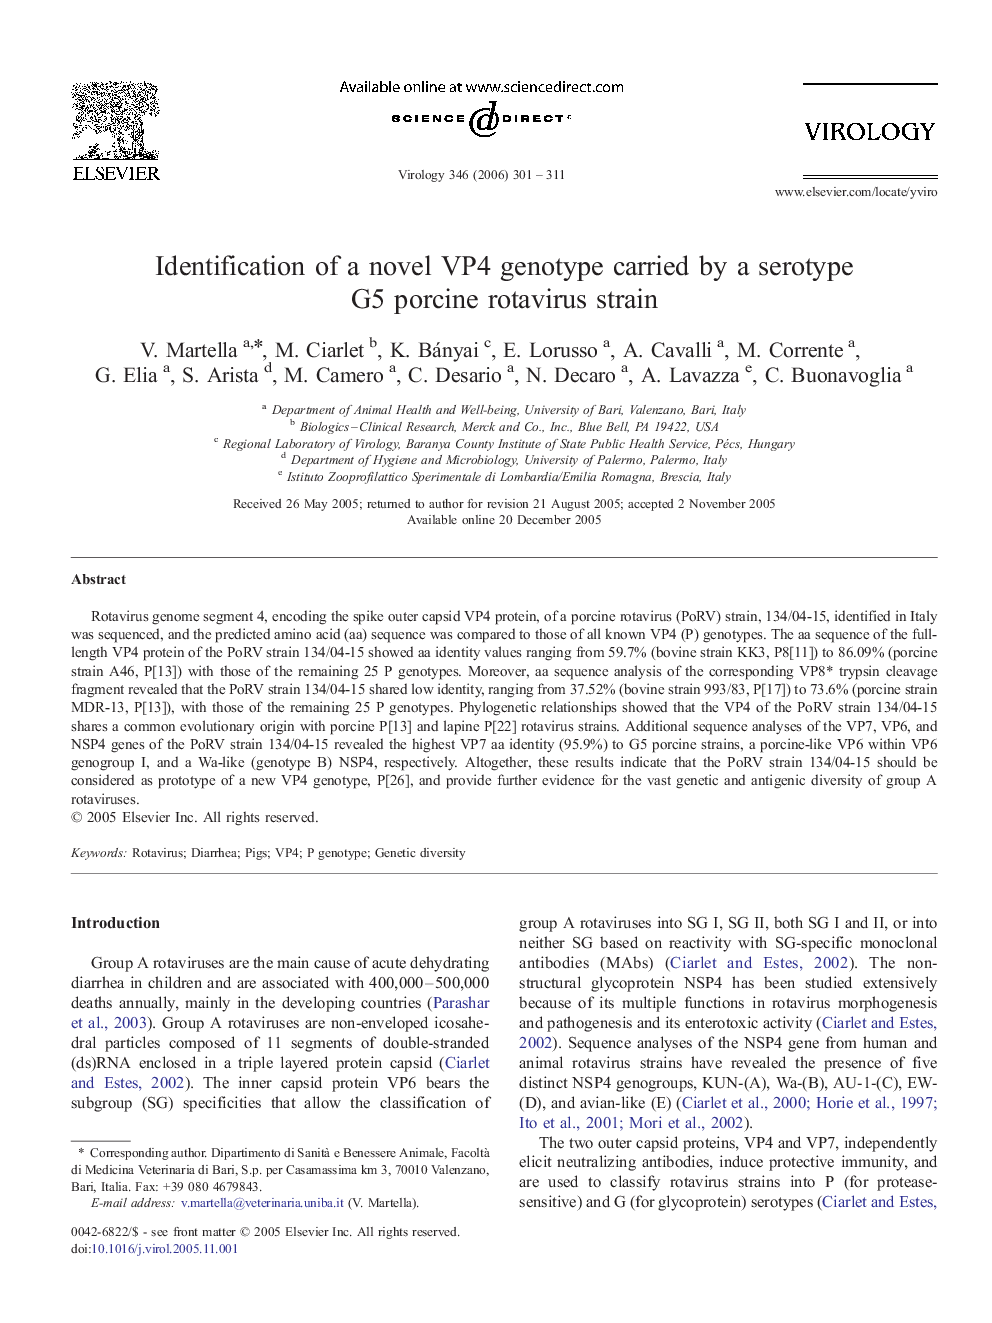 Identification of a novel VP4 genotype carried by a serotype G5 porcine rotavirus strain